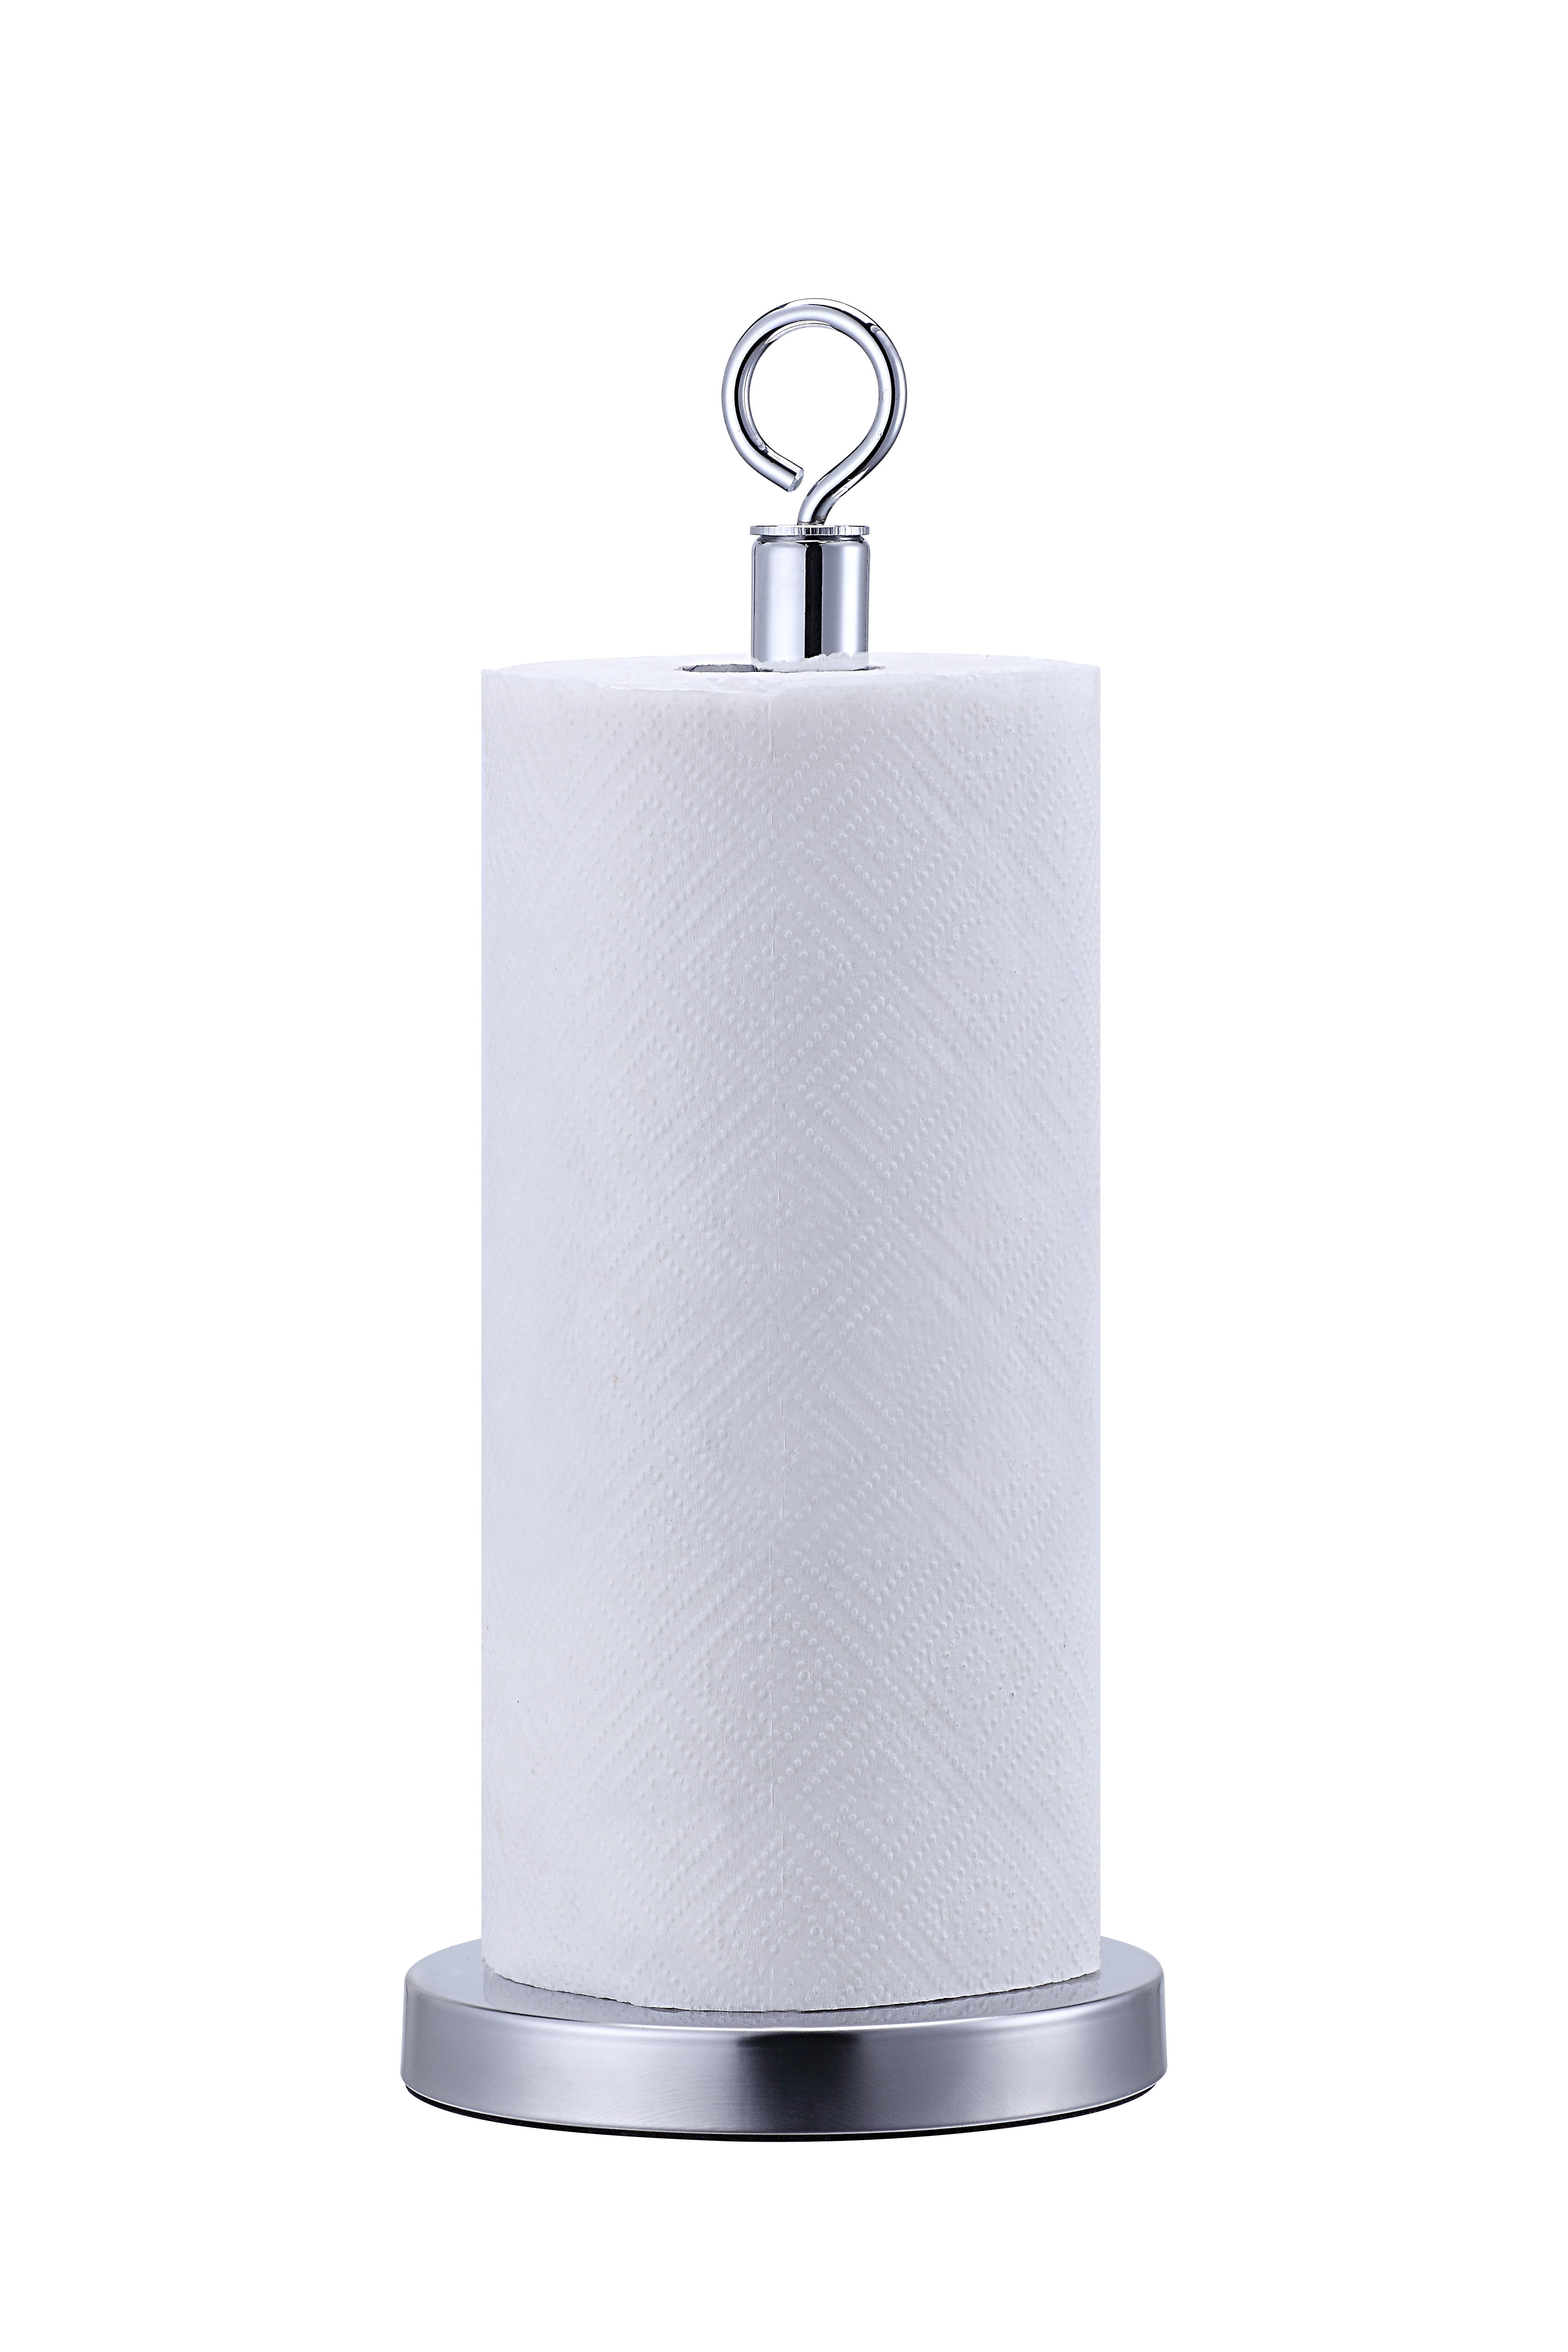 Kitchen Paper Towel Holder Paper Towel Holder Wall Mount for Kitchen #Cr Silver 